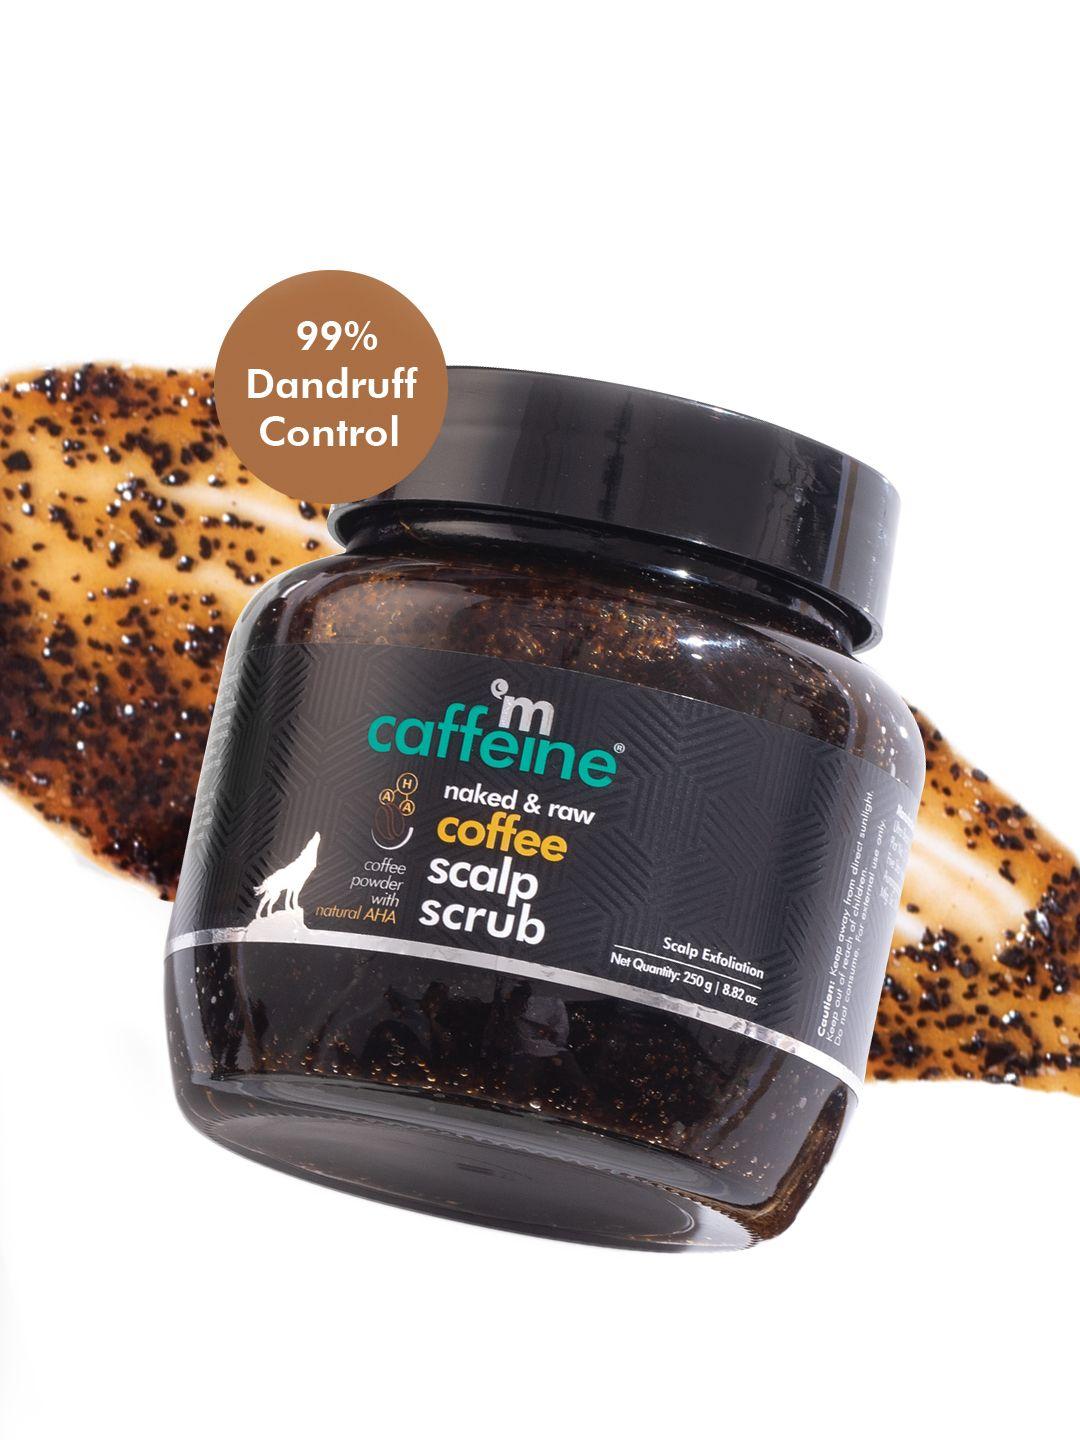 mcaffeine sustainable anti dandruff coffee scalp scrub - dandruff control treatment - 250g